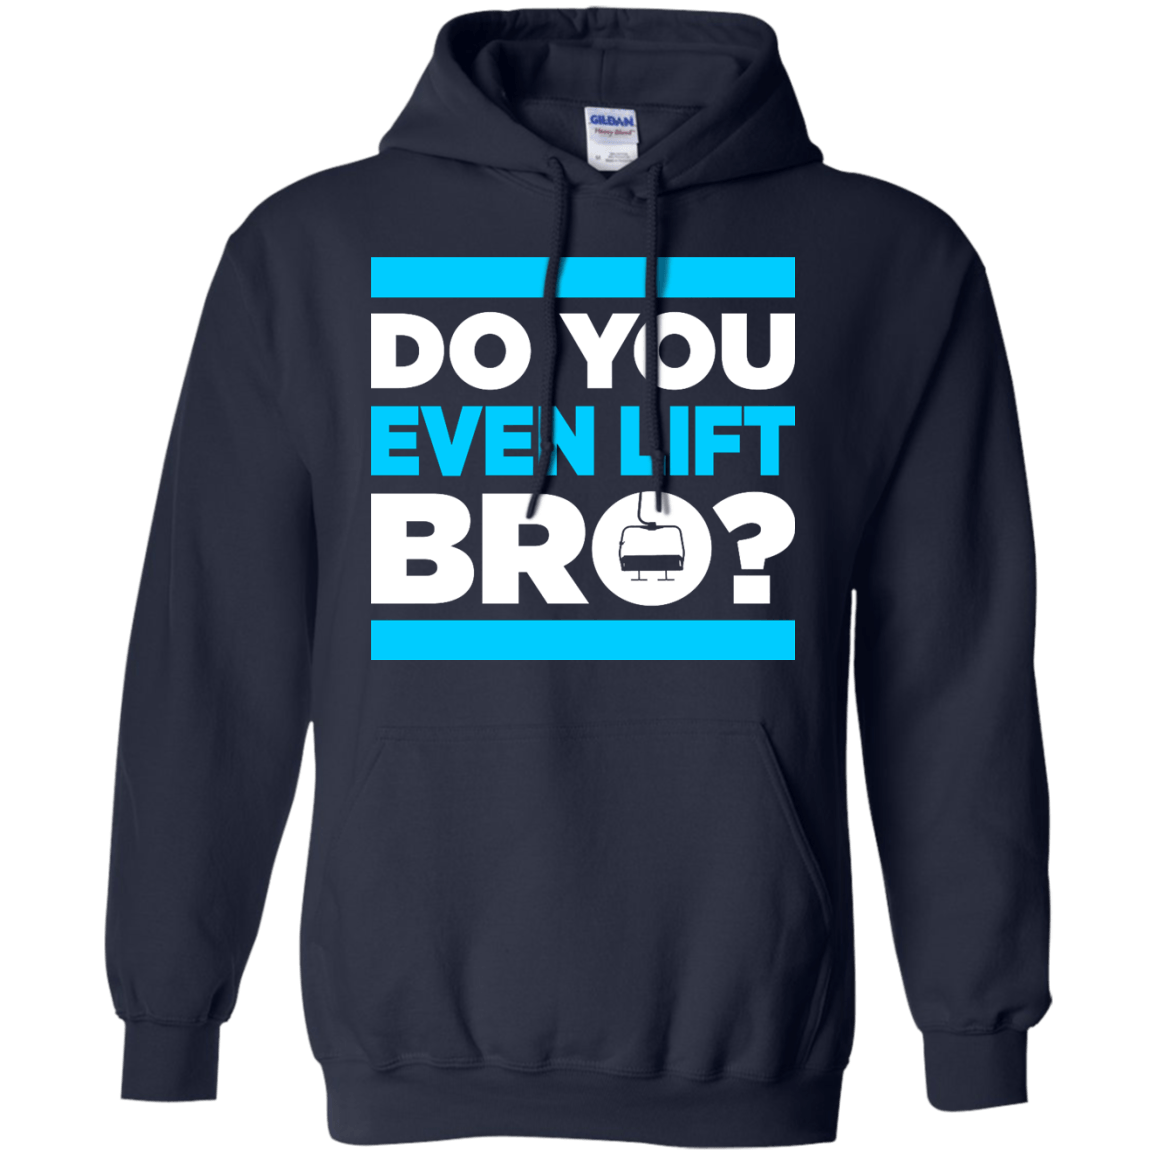 Do You Even Lift Bro? Hoodies - Powderaddicts